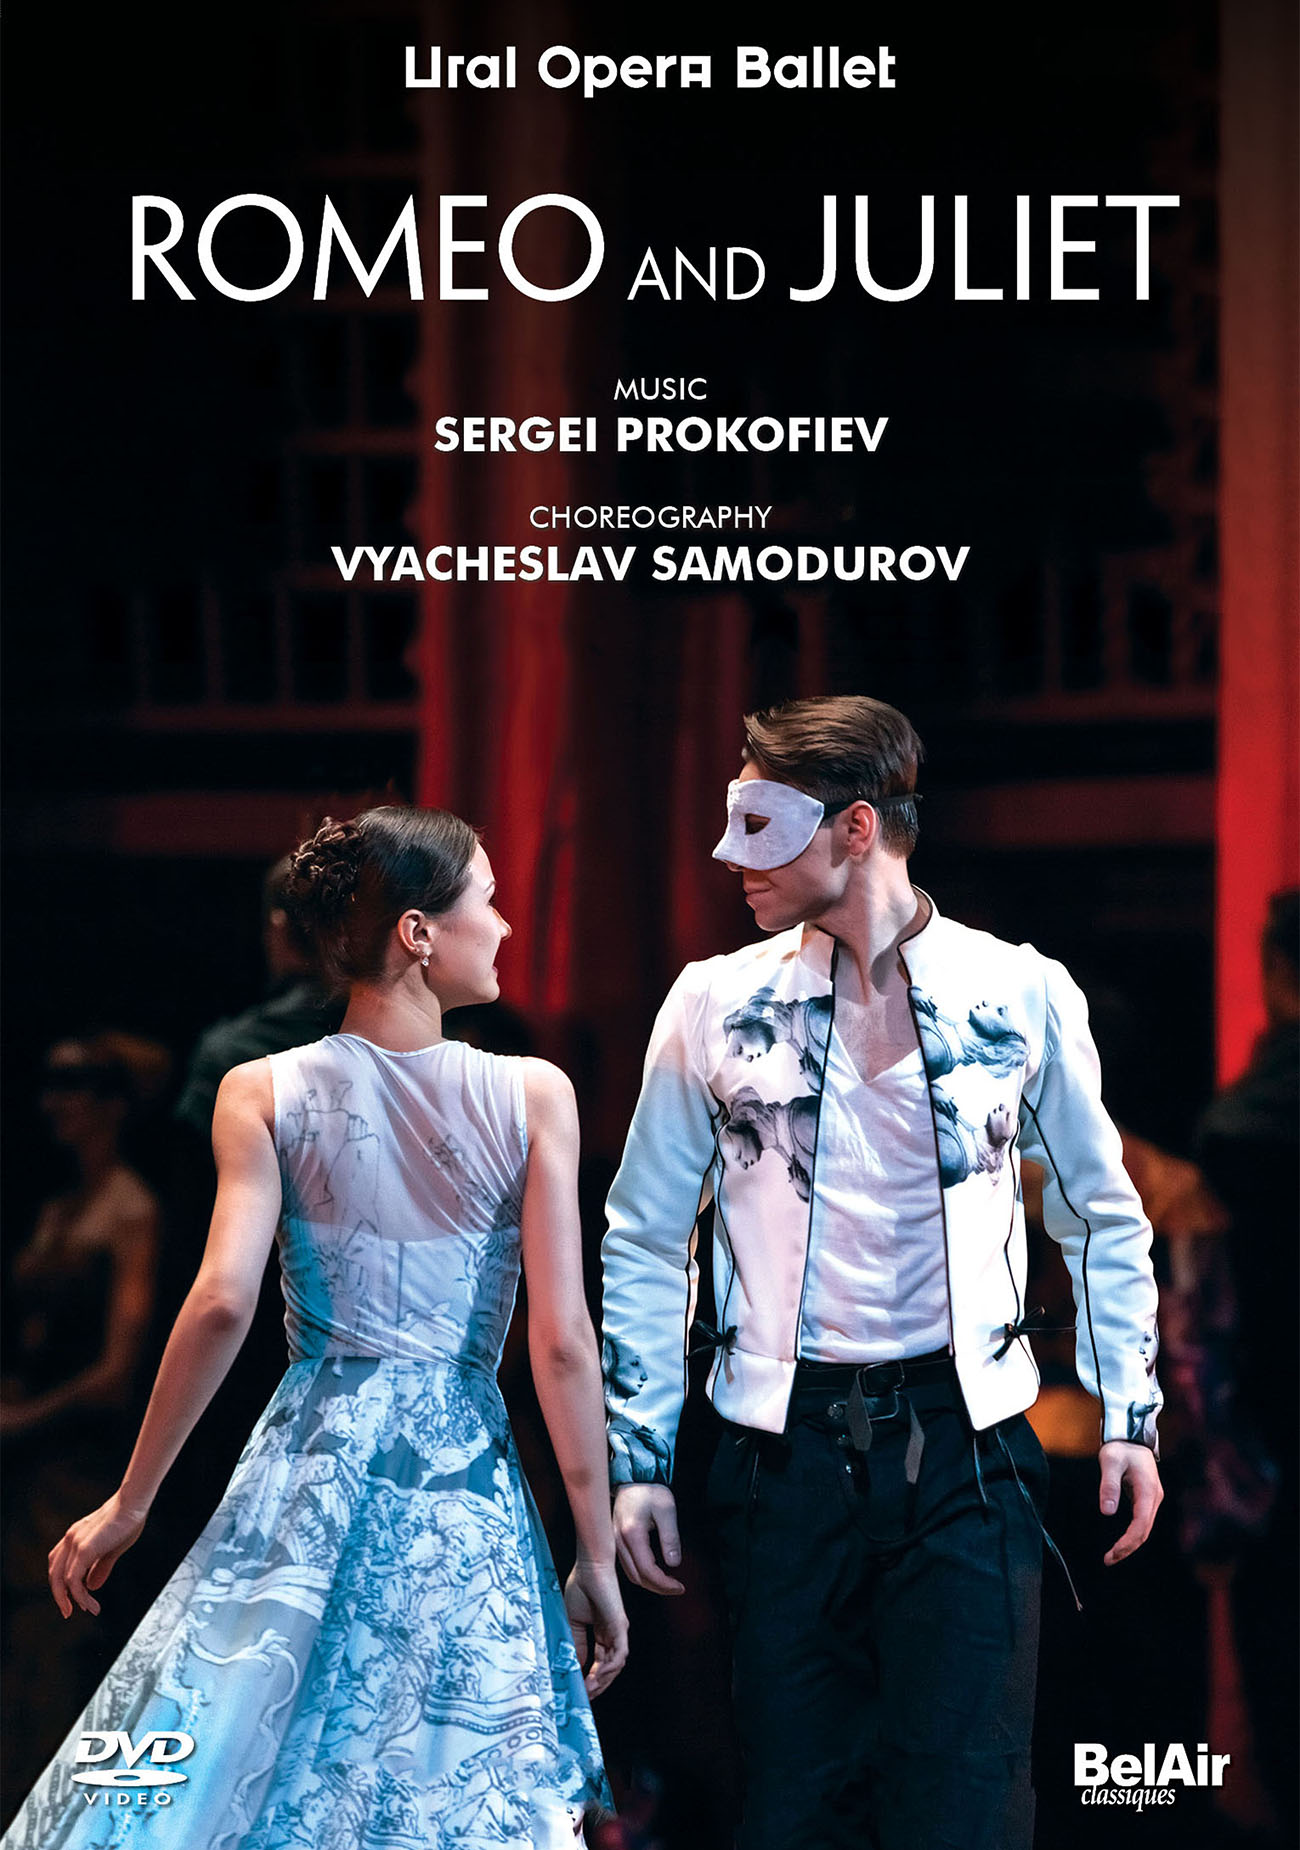 Stuttgart Ballet, 2017 Ballet Prokofiev Blu-ray S.: Romeo and Juliet 